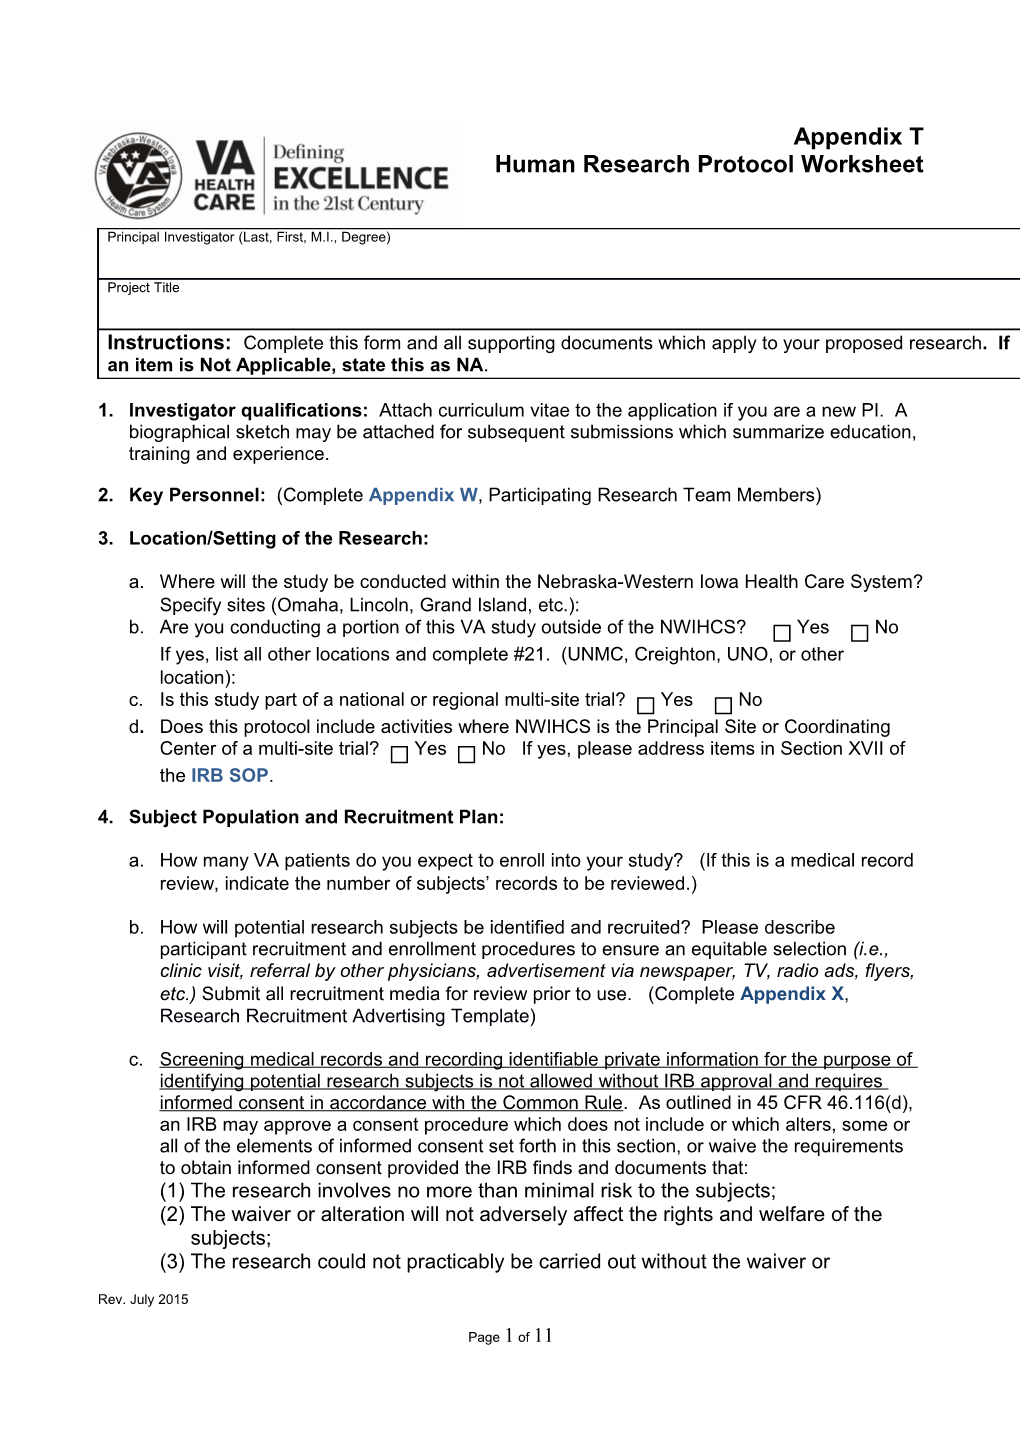 Human Research Protocol Worksheet